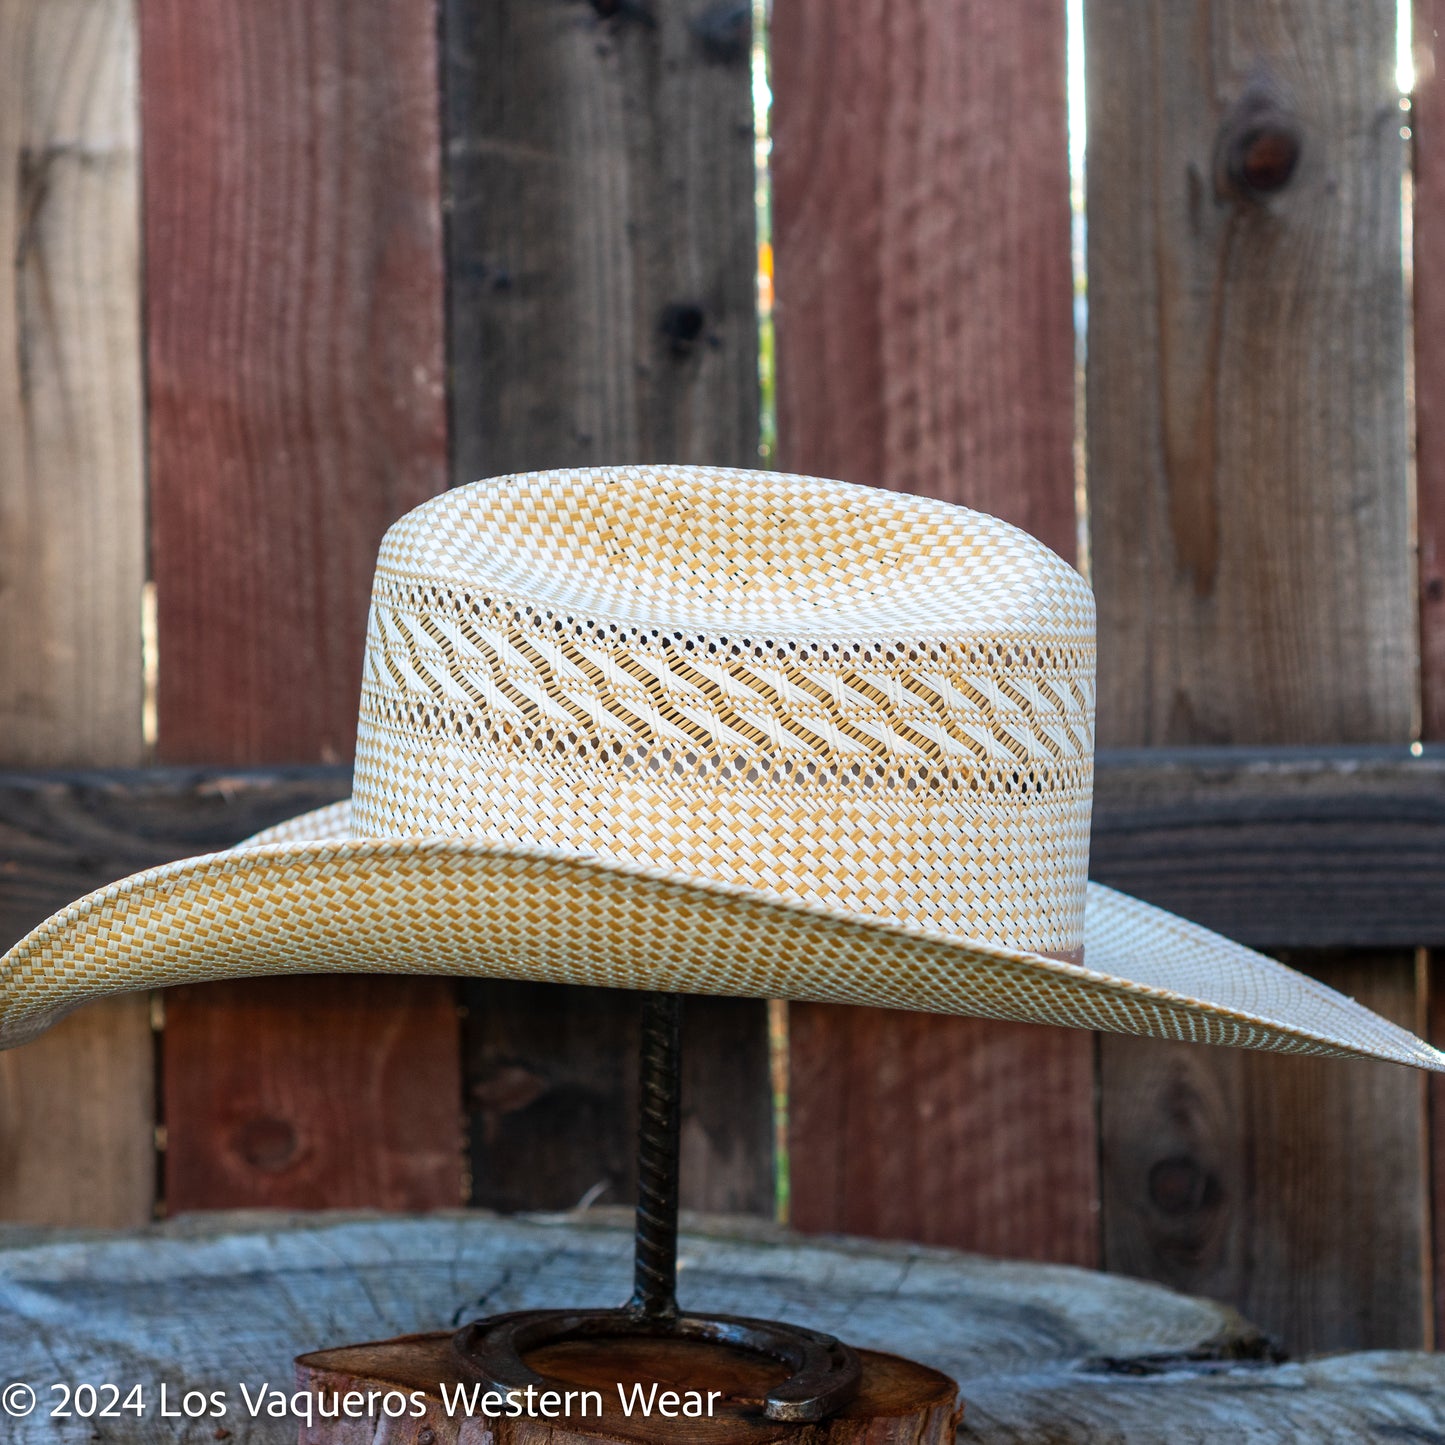 Stetson Classic 10x Straw Cowboy Hat Ivory/wheat